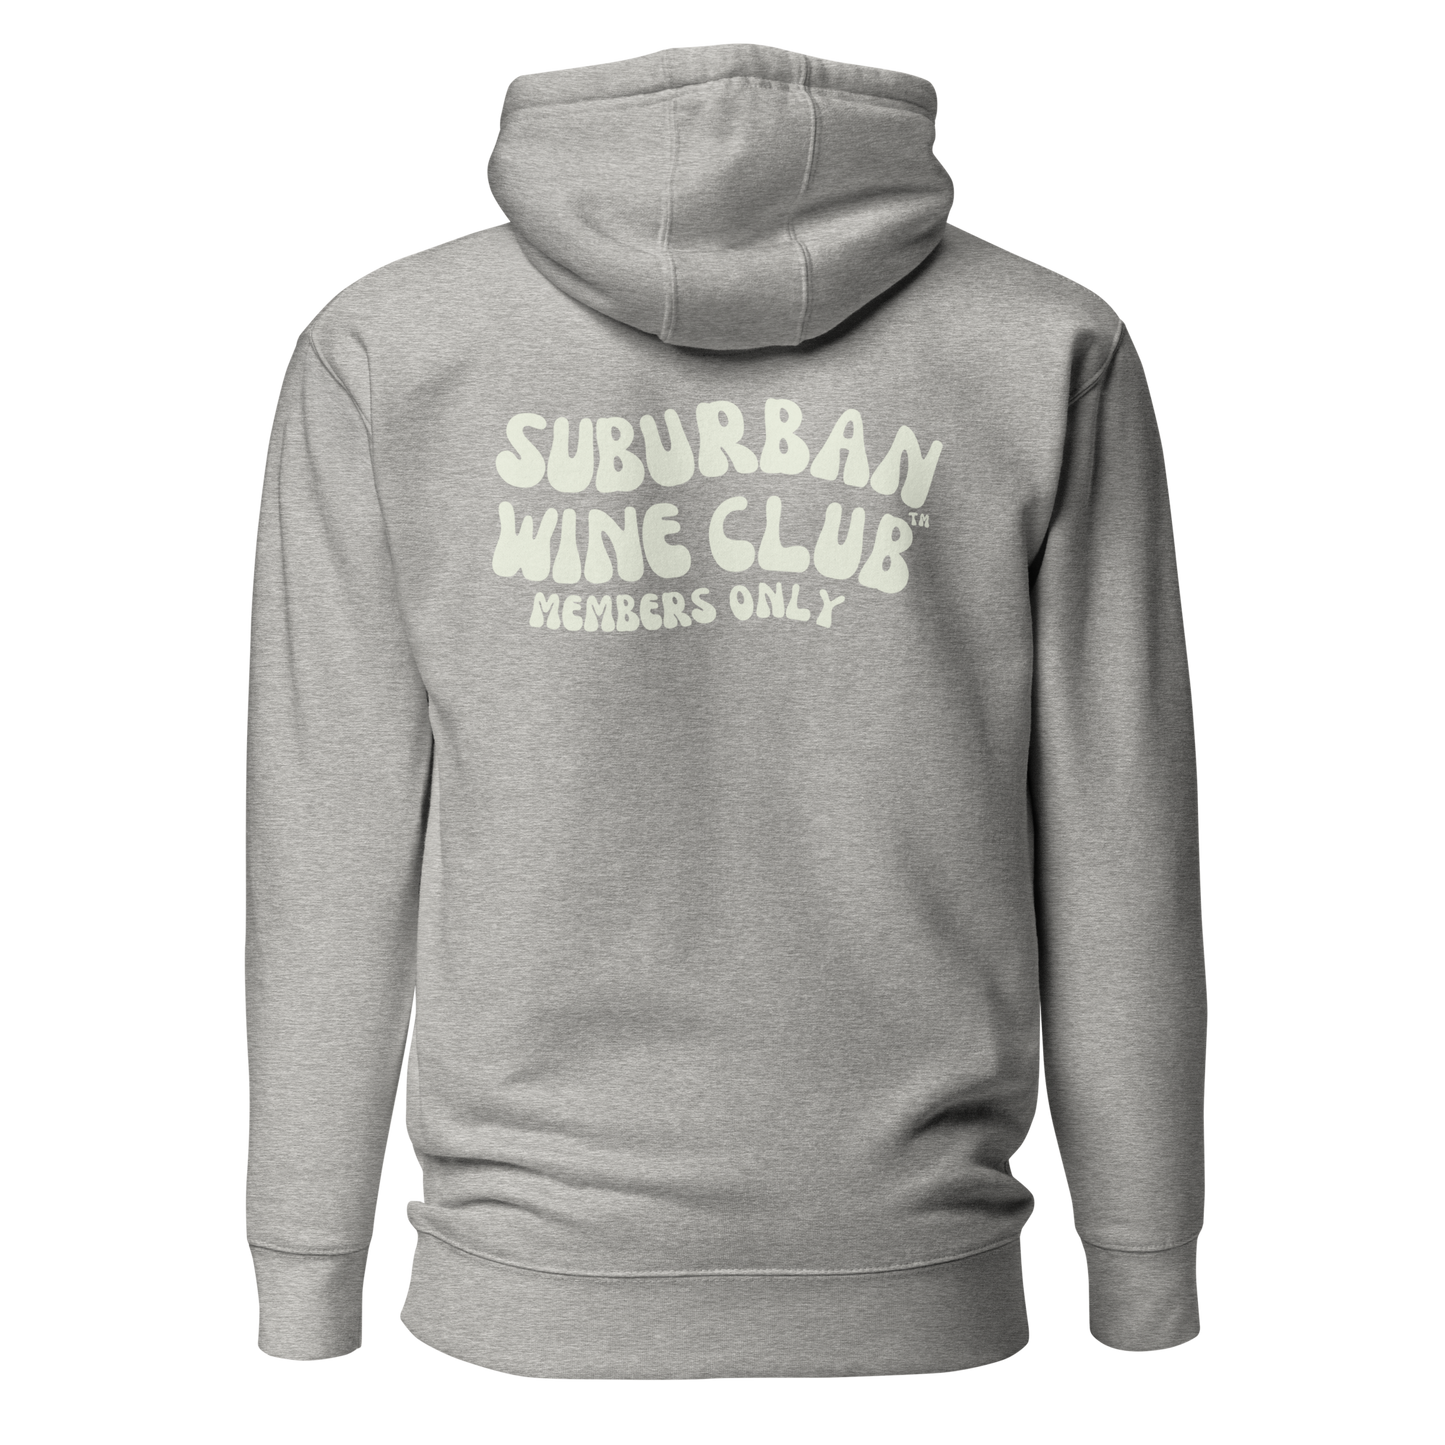 Suburban WIne Club™ Premium Hoodie | Cotton Heritage M2580 front/back